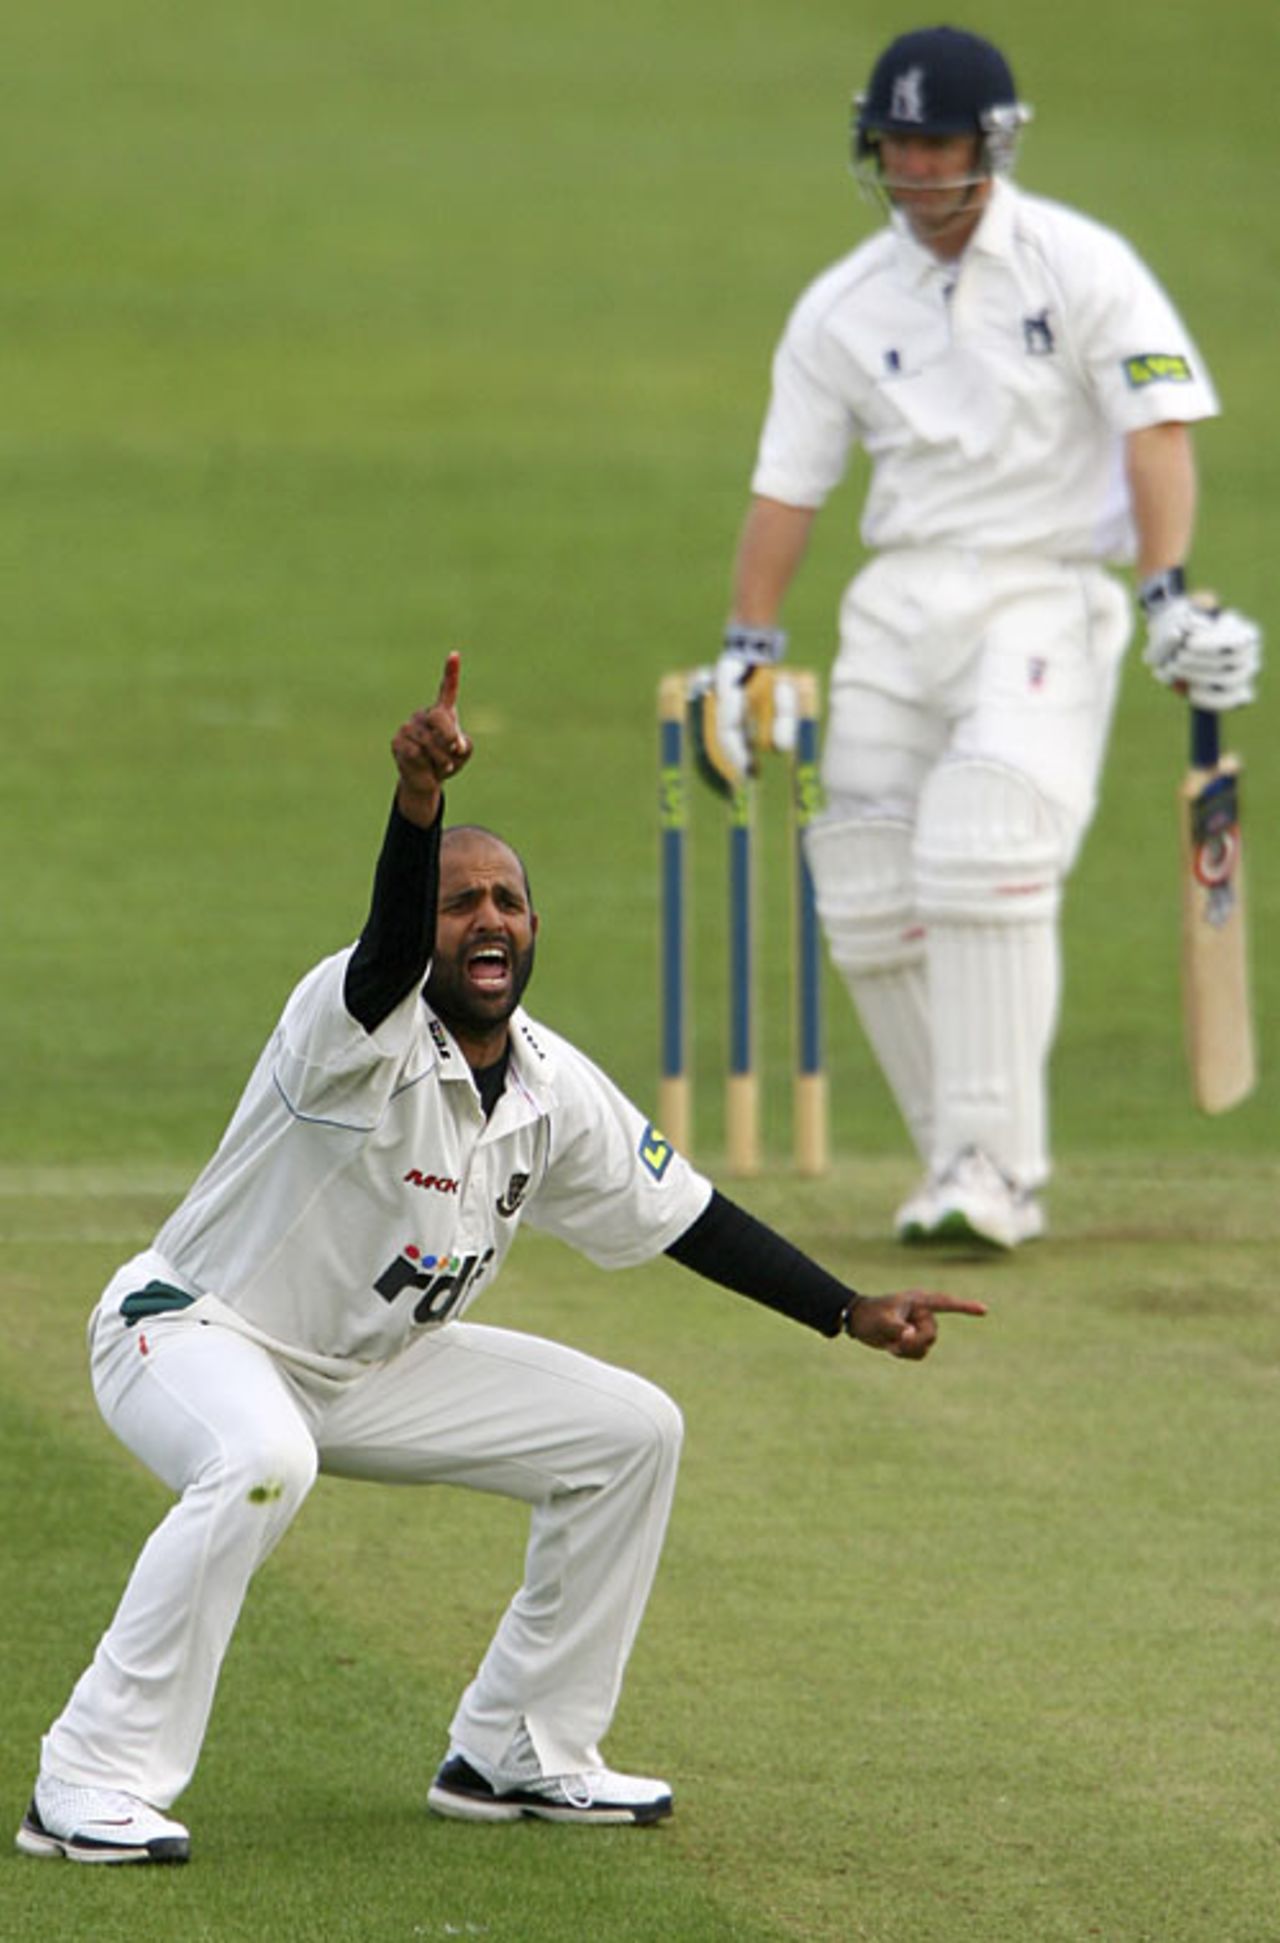 Rana Naved-ul-Hasan appeals unsuccessfully for Darren Maddy's wicket, Warwickshire v Sussex, Edgbaston, April 25, 2007